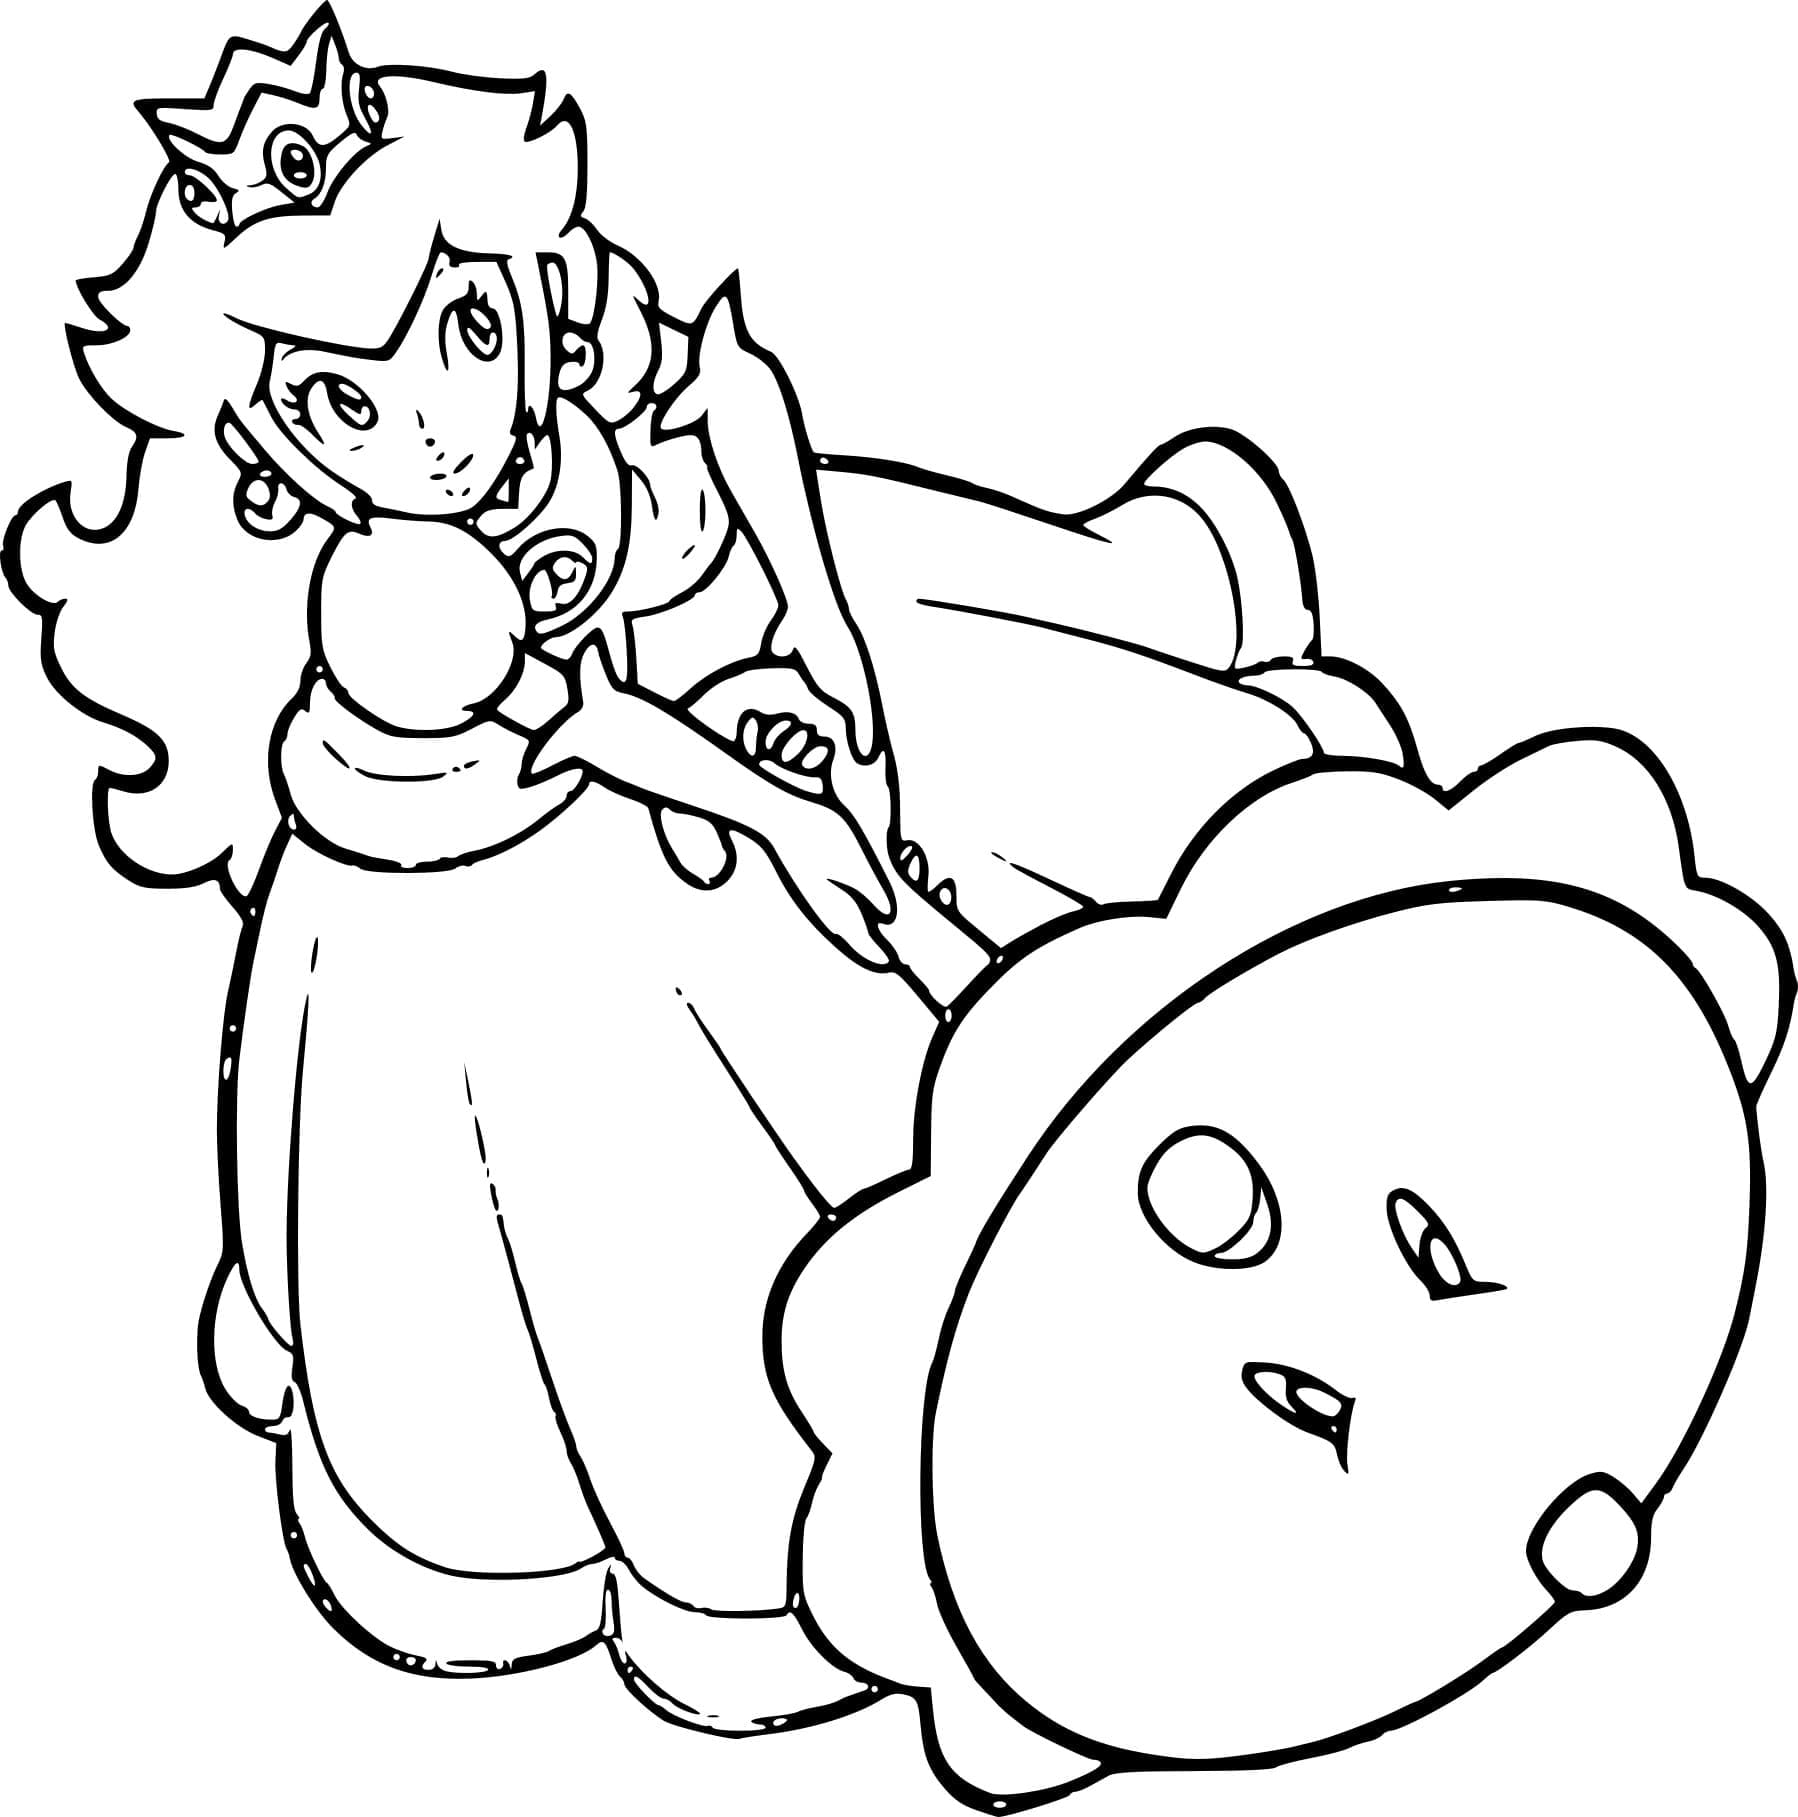 Princess peach and umbrella coloring page